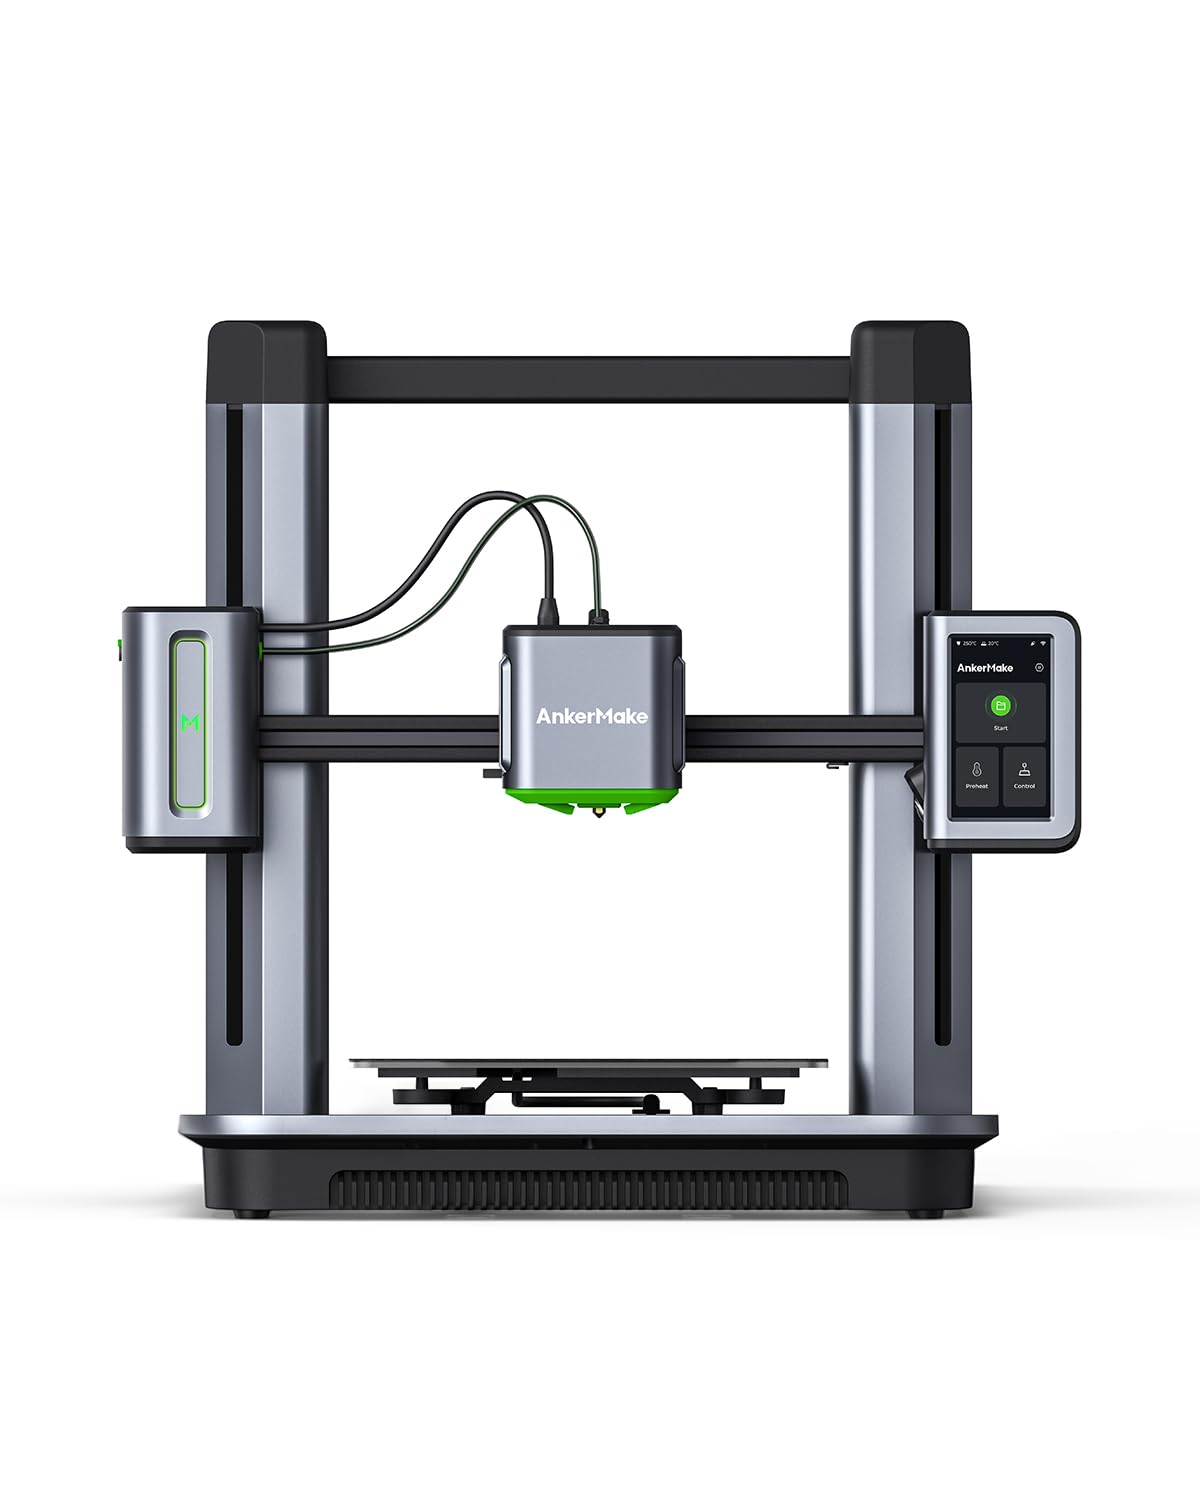 Prime Exclusive: AnkerMake M5 3D Printer (500 mm/s) $500, AnkerMake M5C 3D Printer $319 & More + Free Shipping